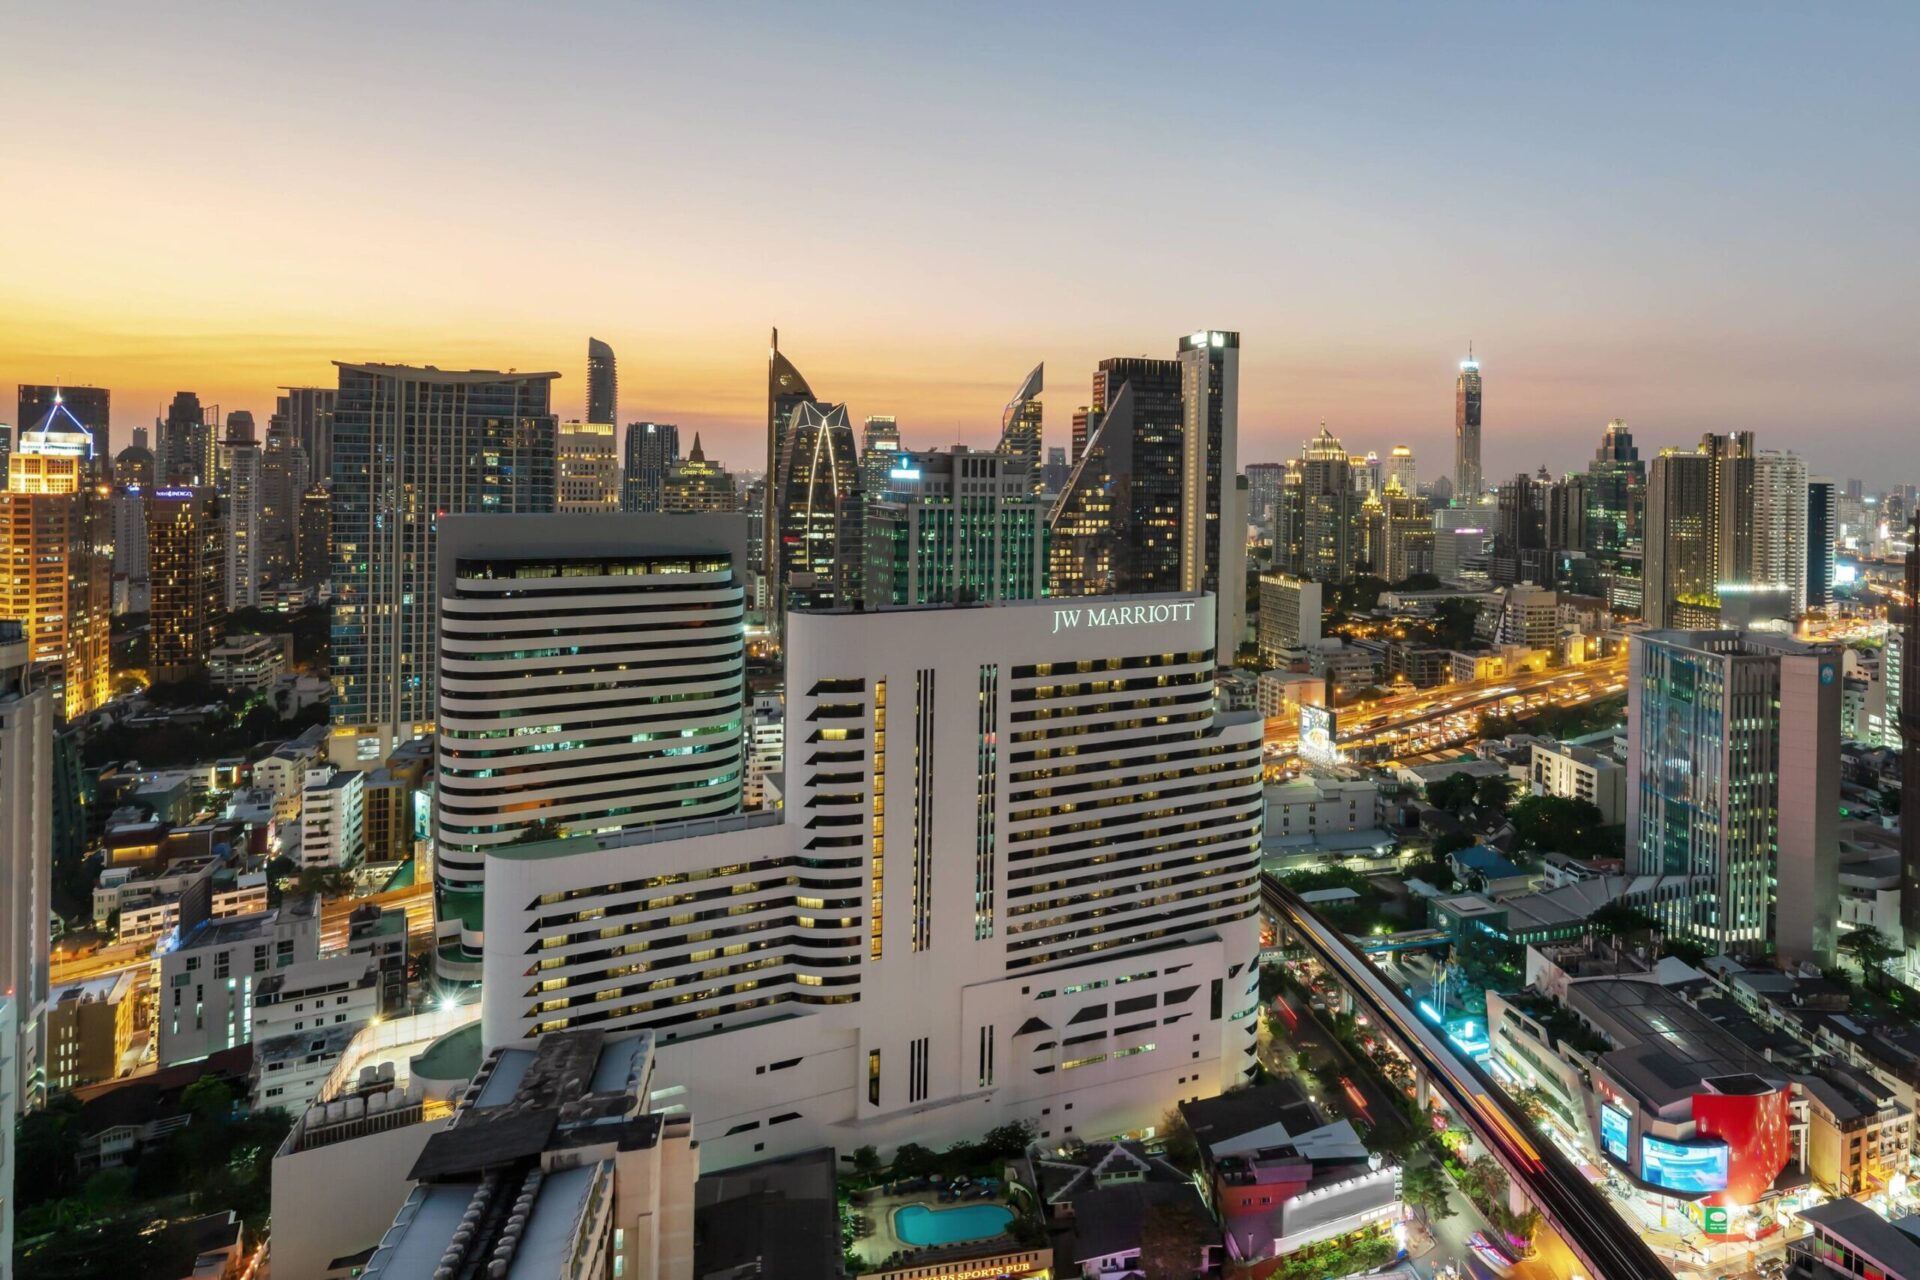 【JW Marriott Hotel Bangkok】JW マリオット ホテル バンコクに泊まってみた